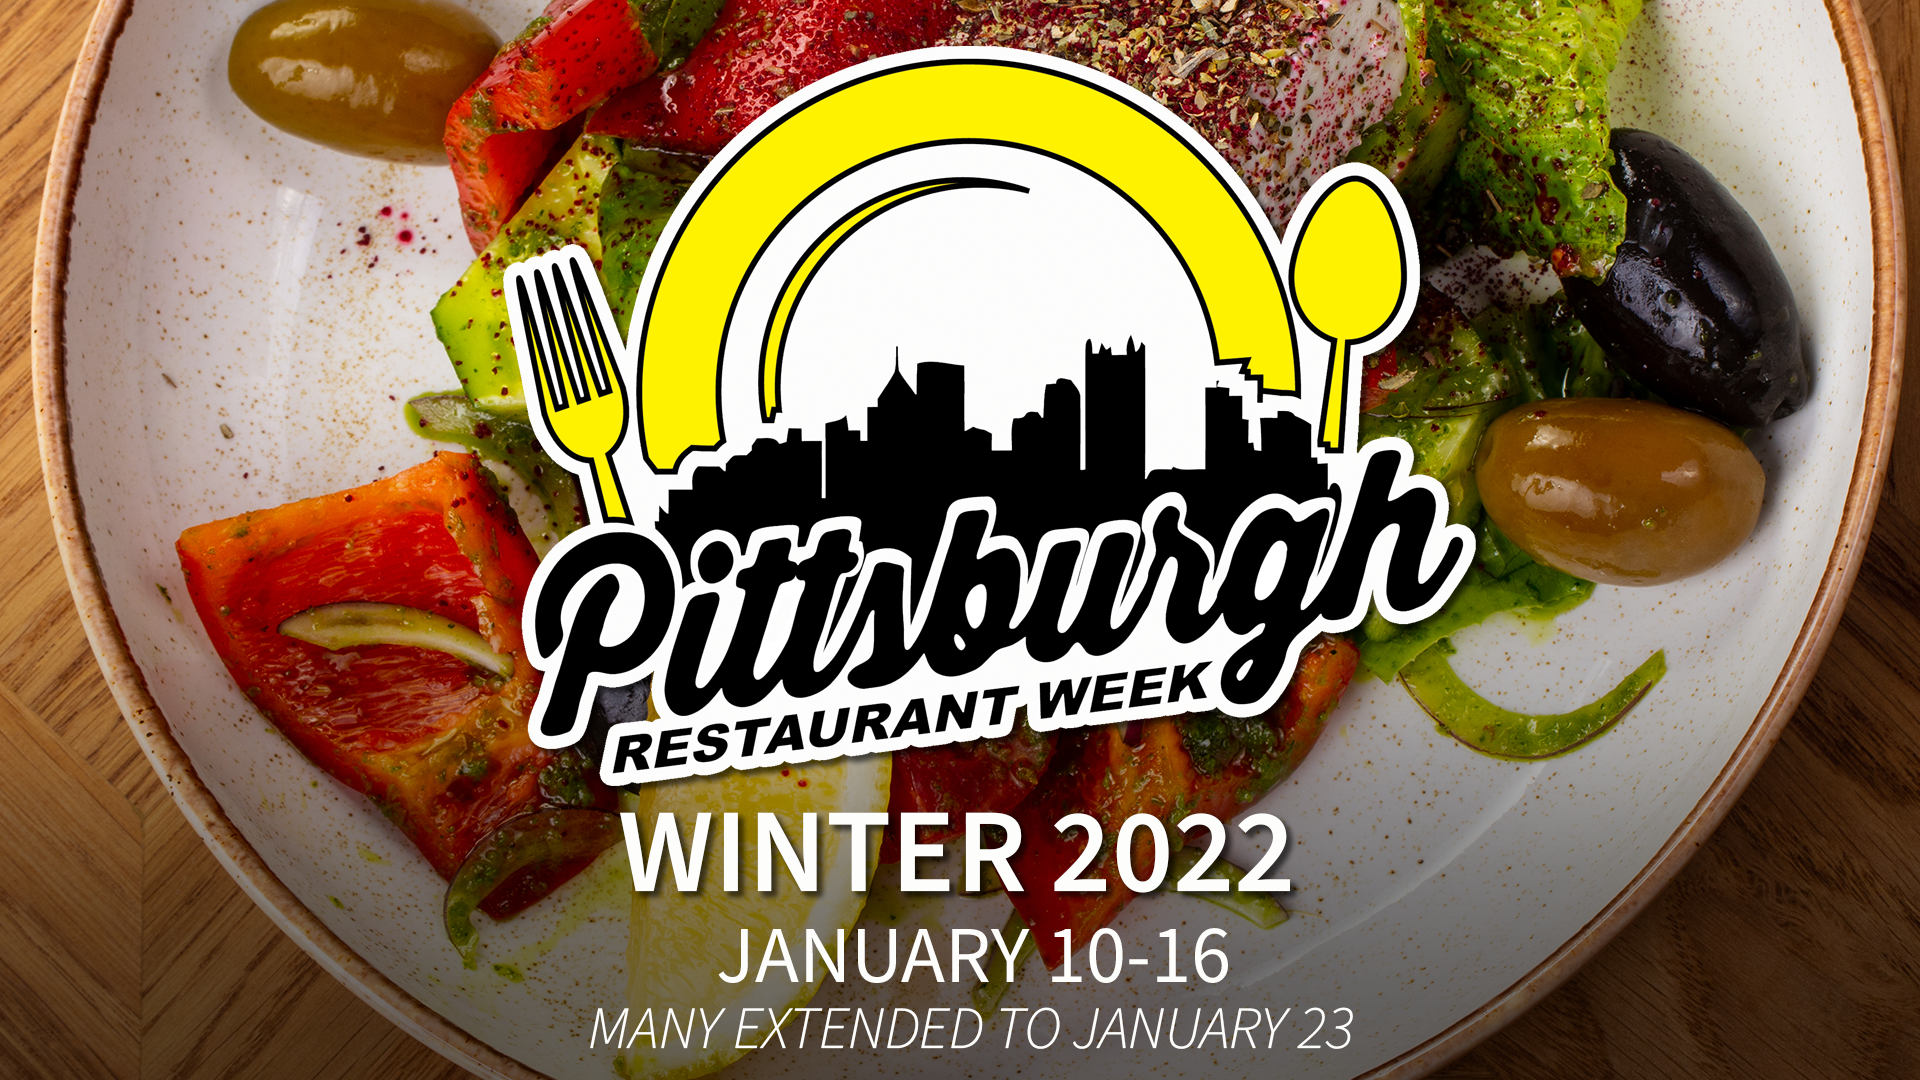 Pittsburgh Restaurant Week Winter 2022